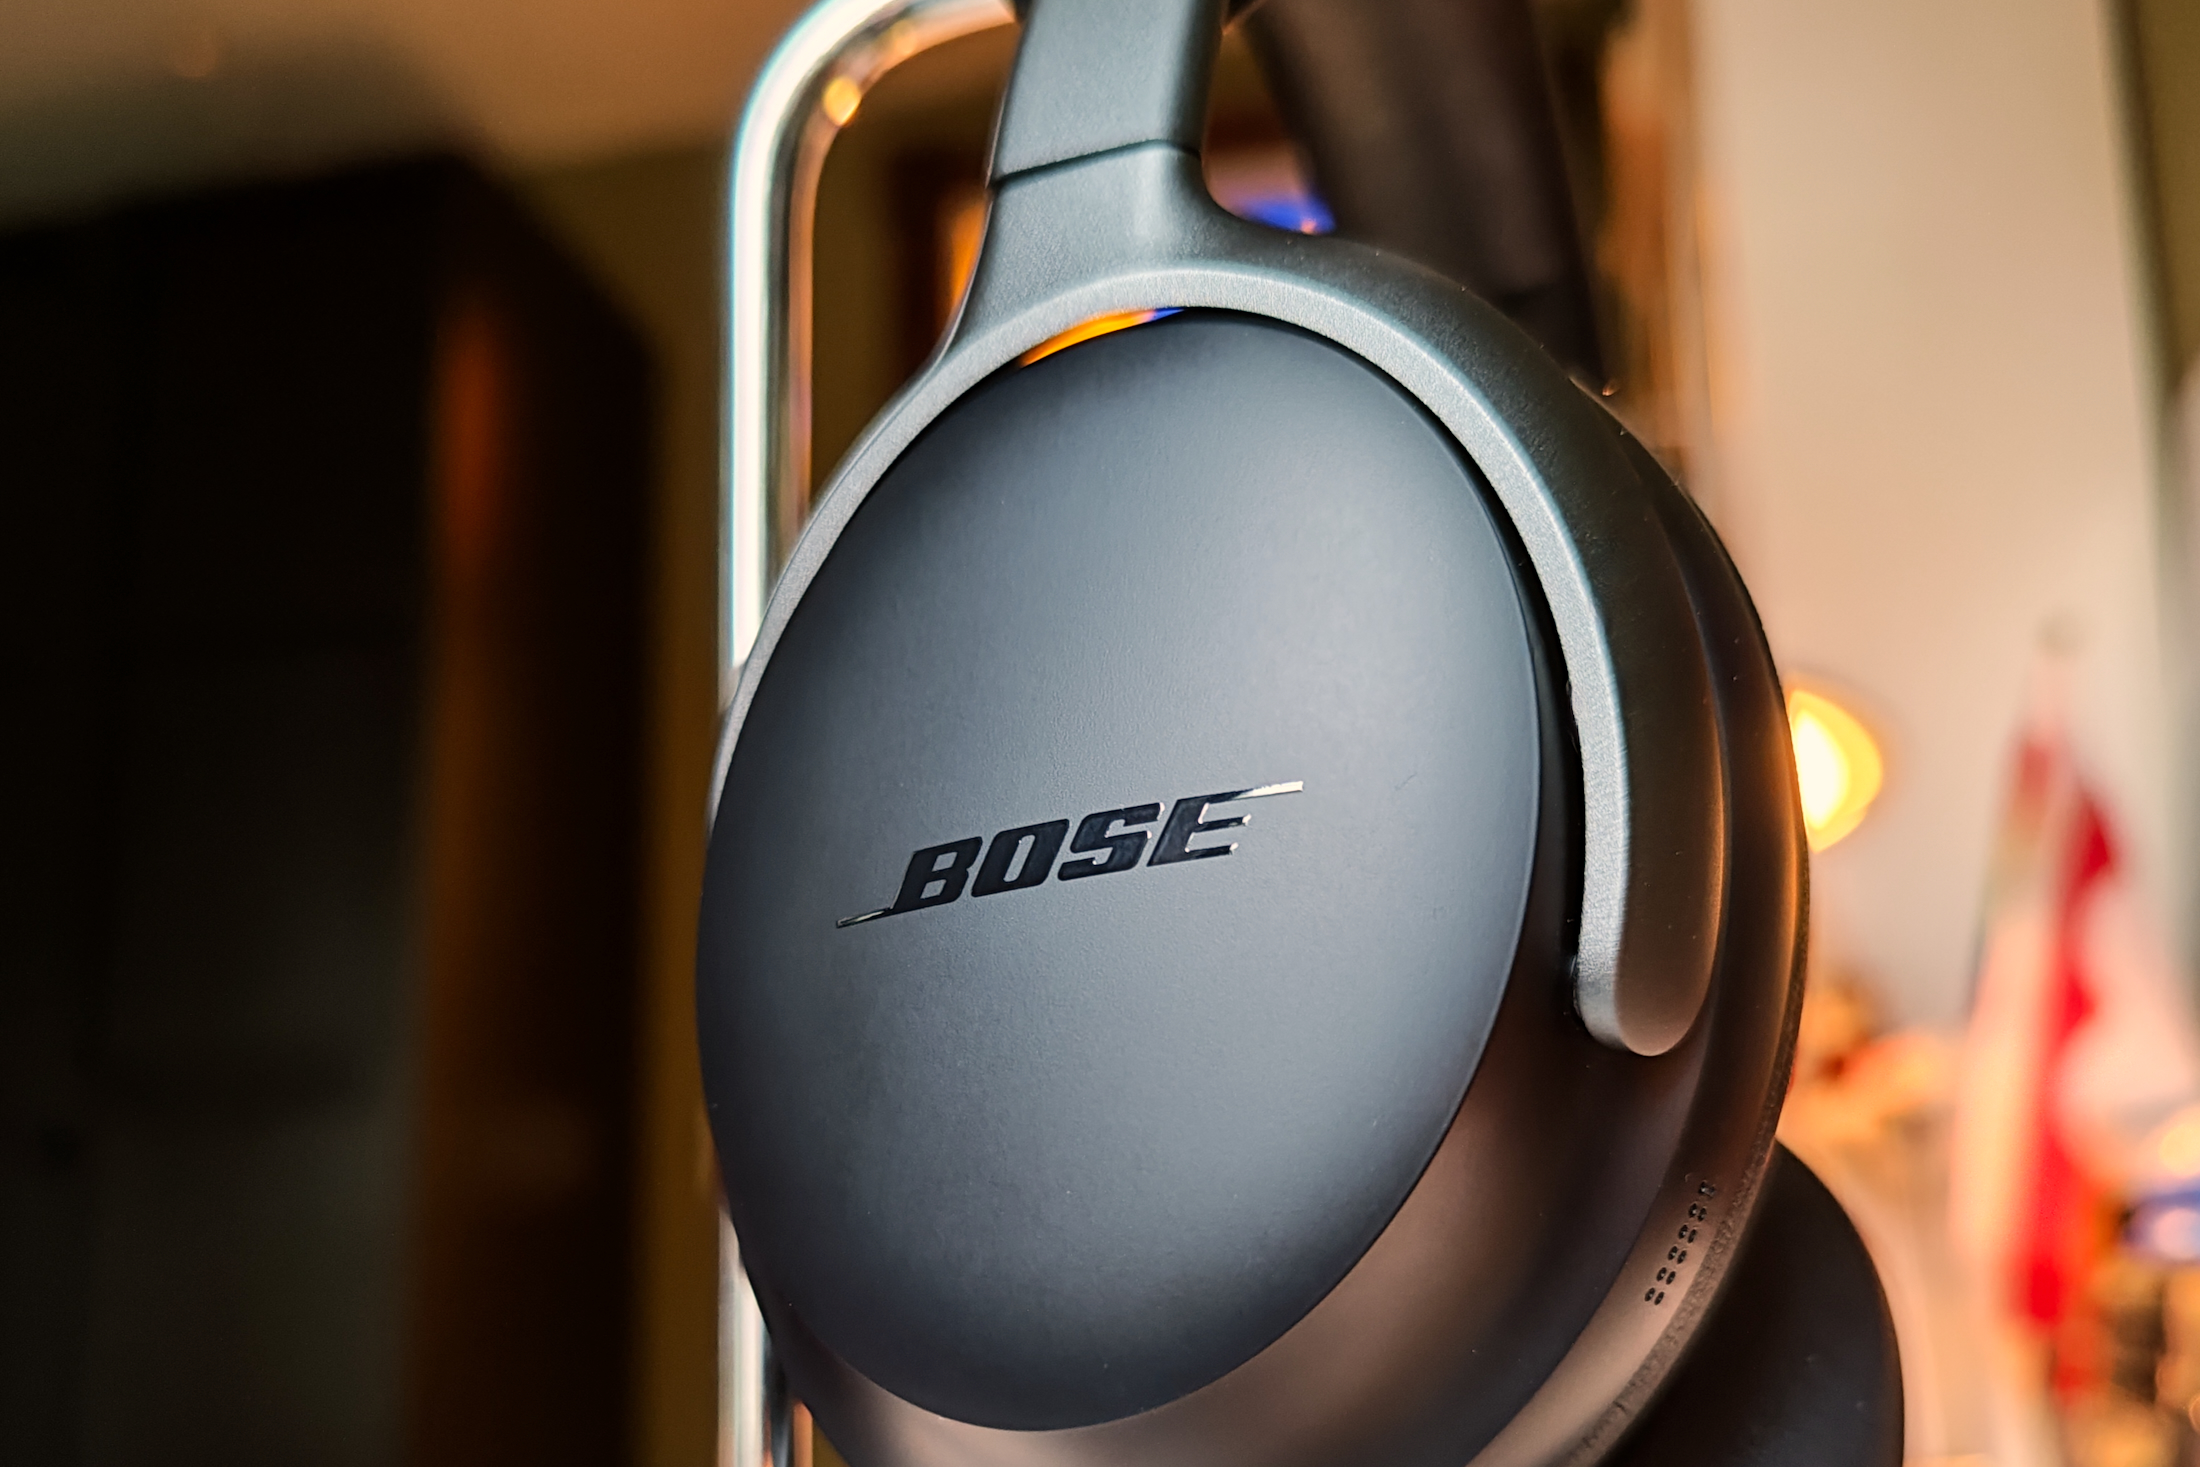 Bose QuietComfort Ultra Headphones, Black with Portable Wireless